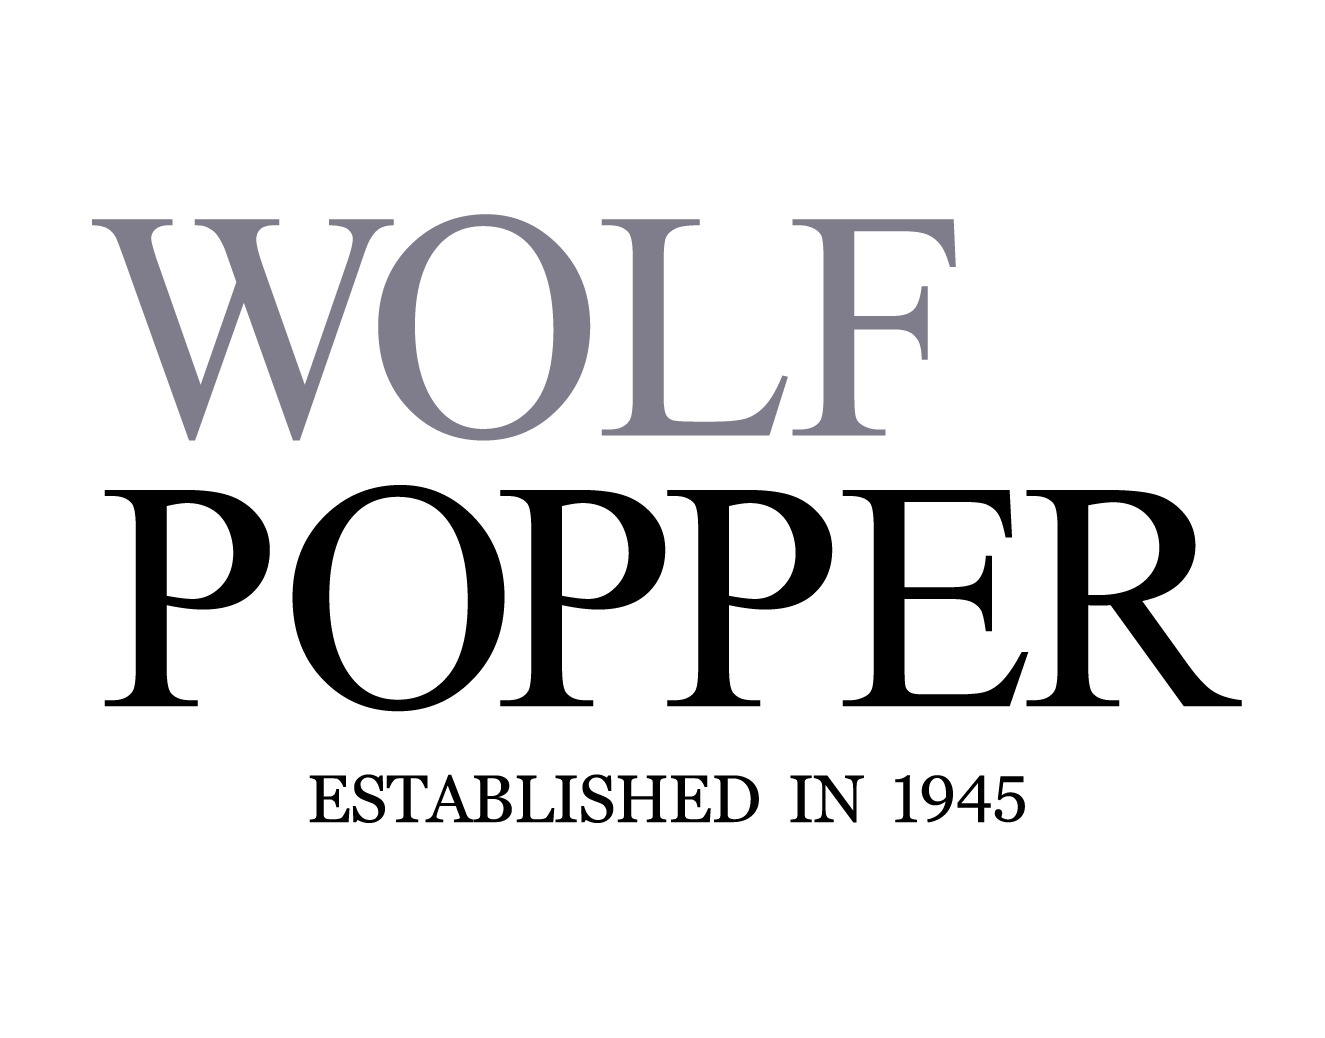 Winner Image - Wolf Popper